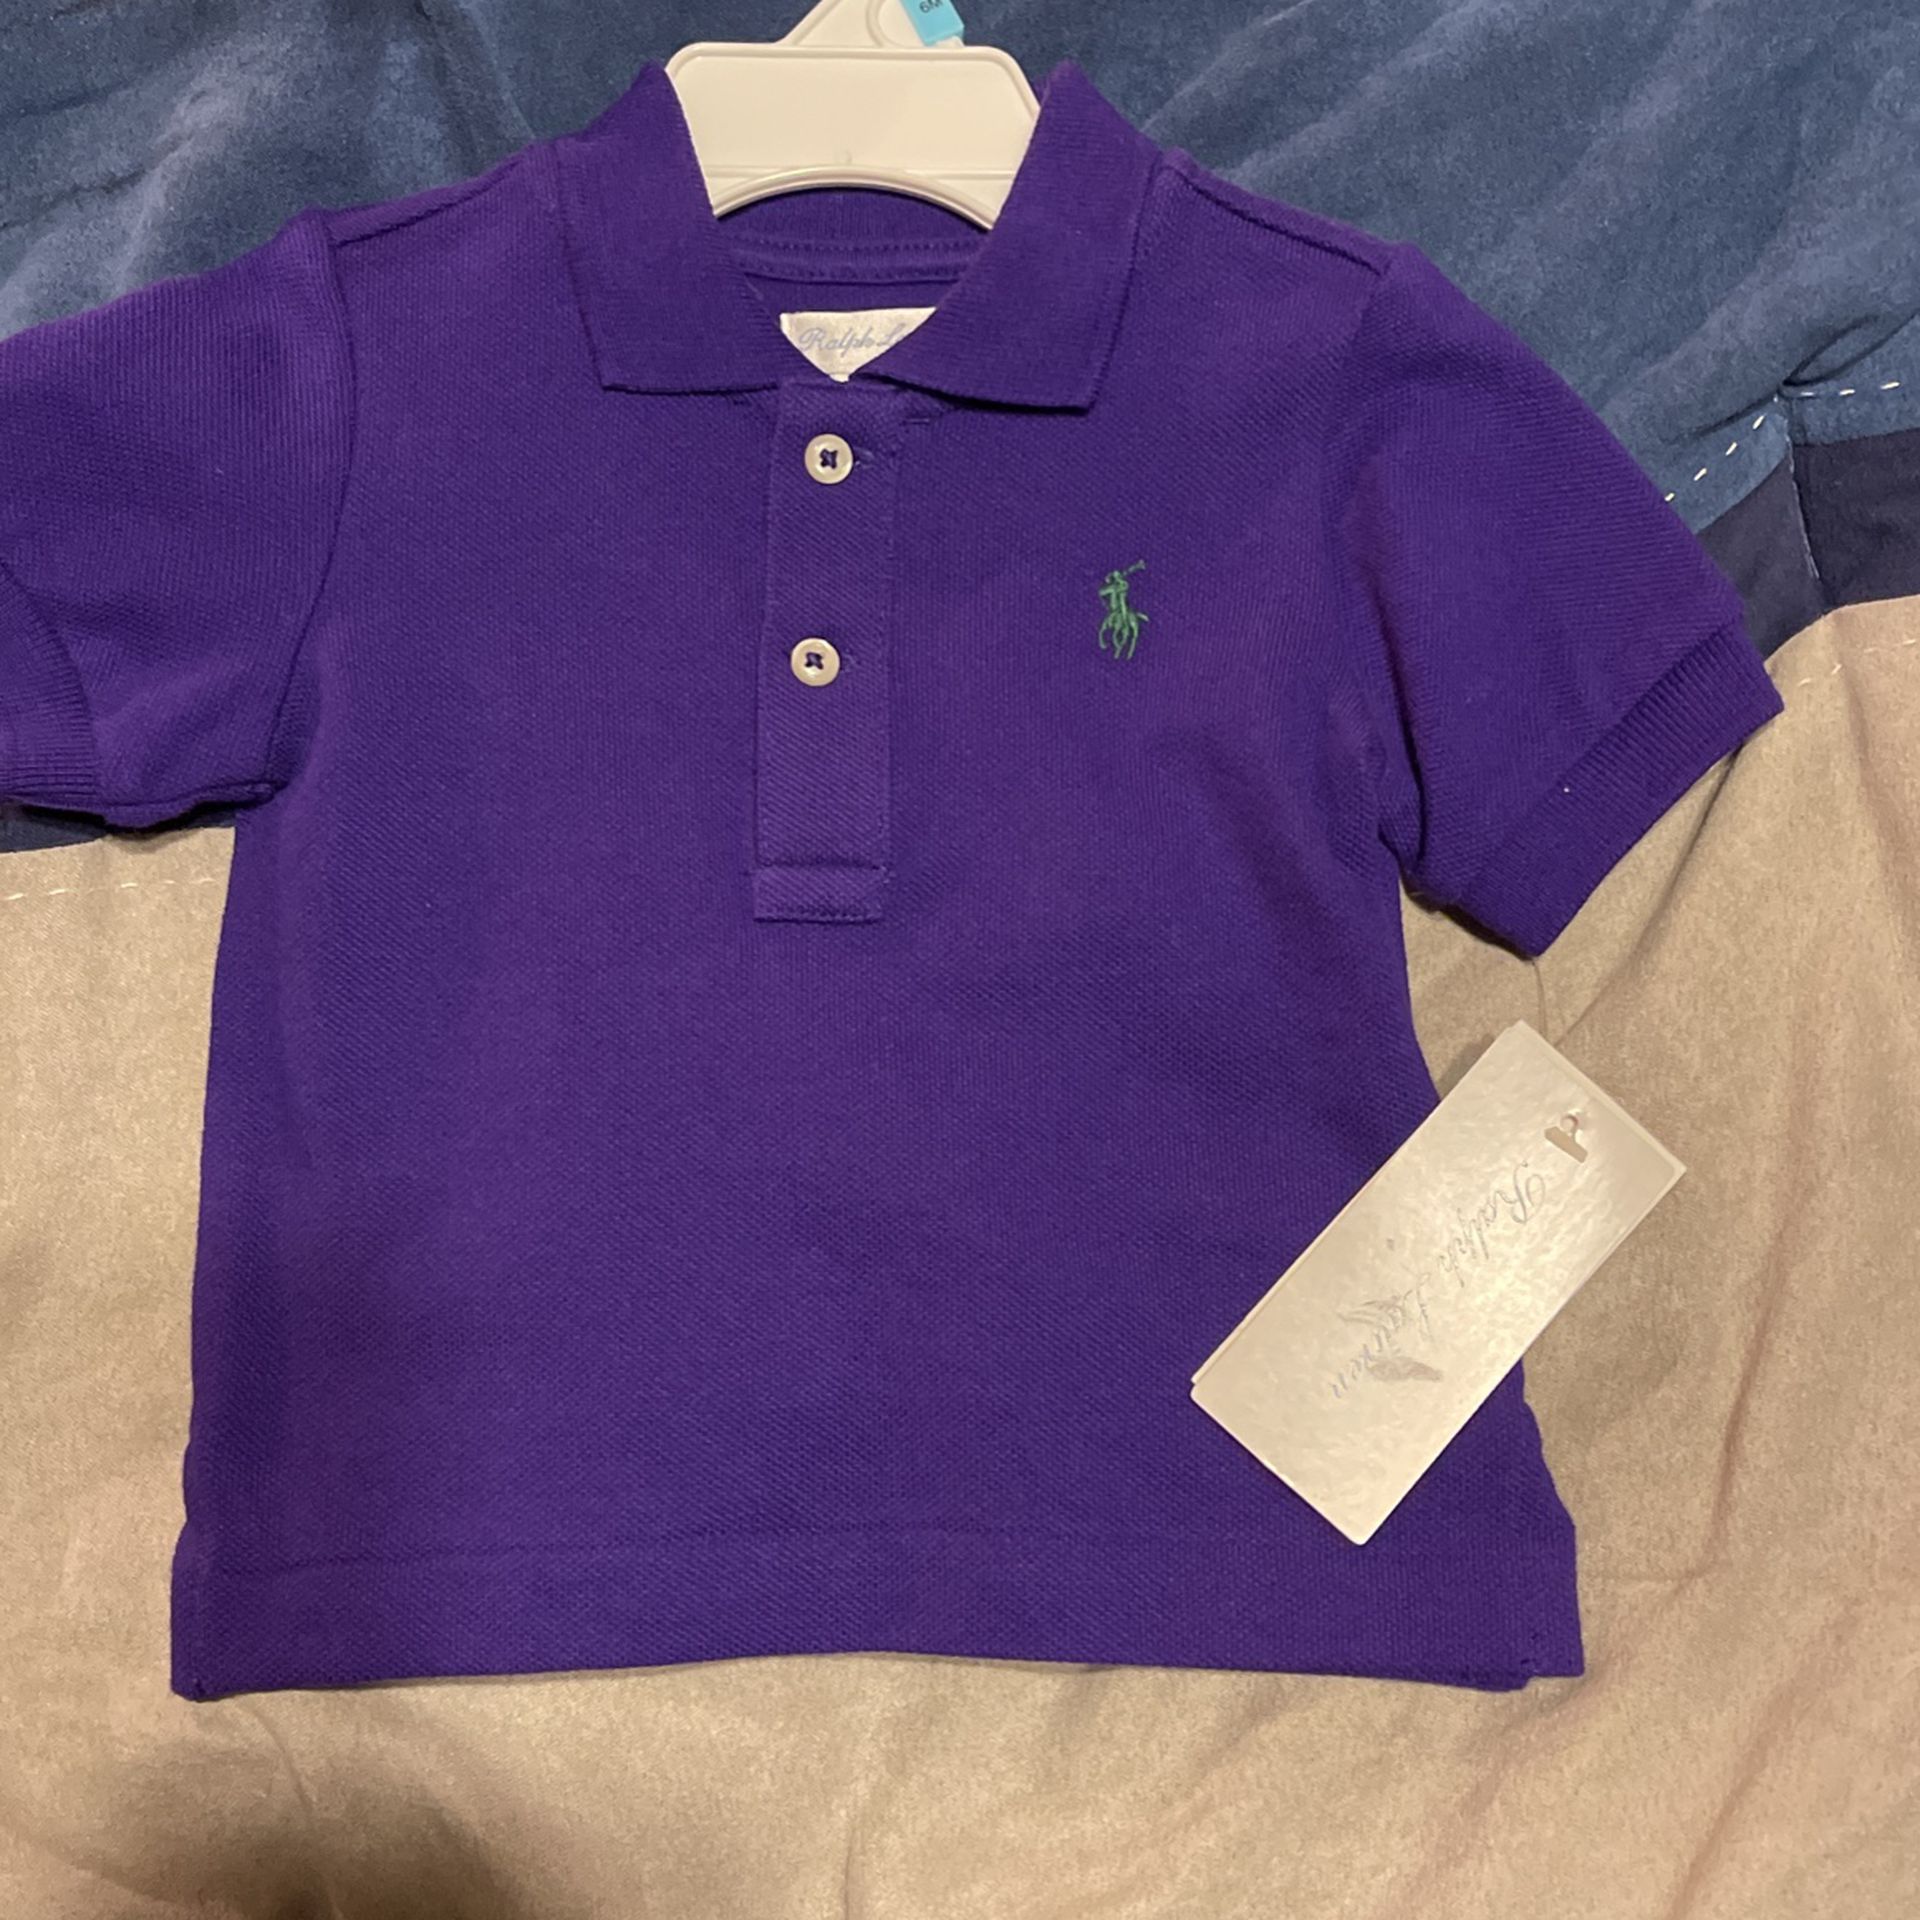 Cute Purple Shirt